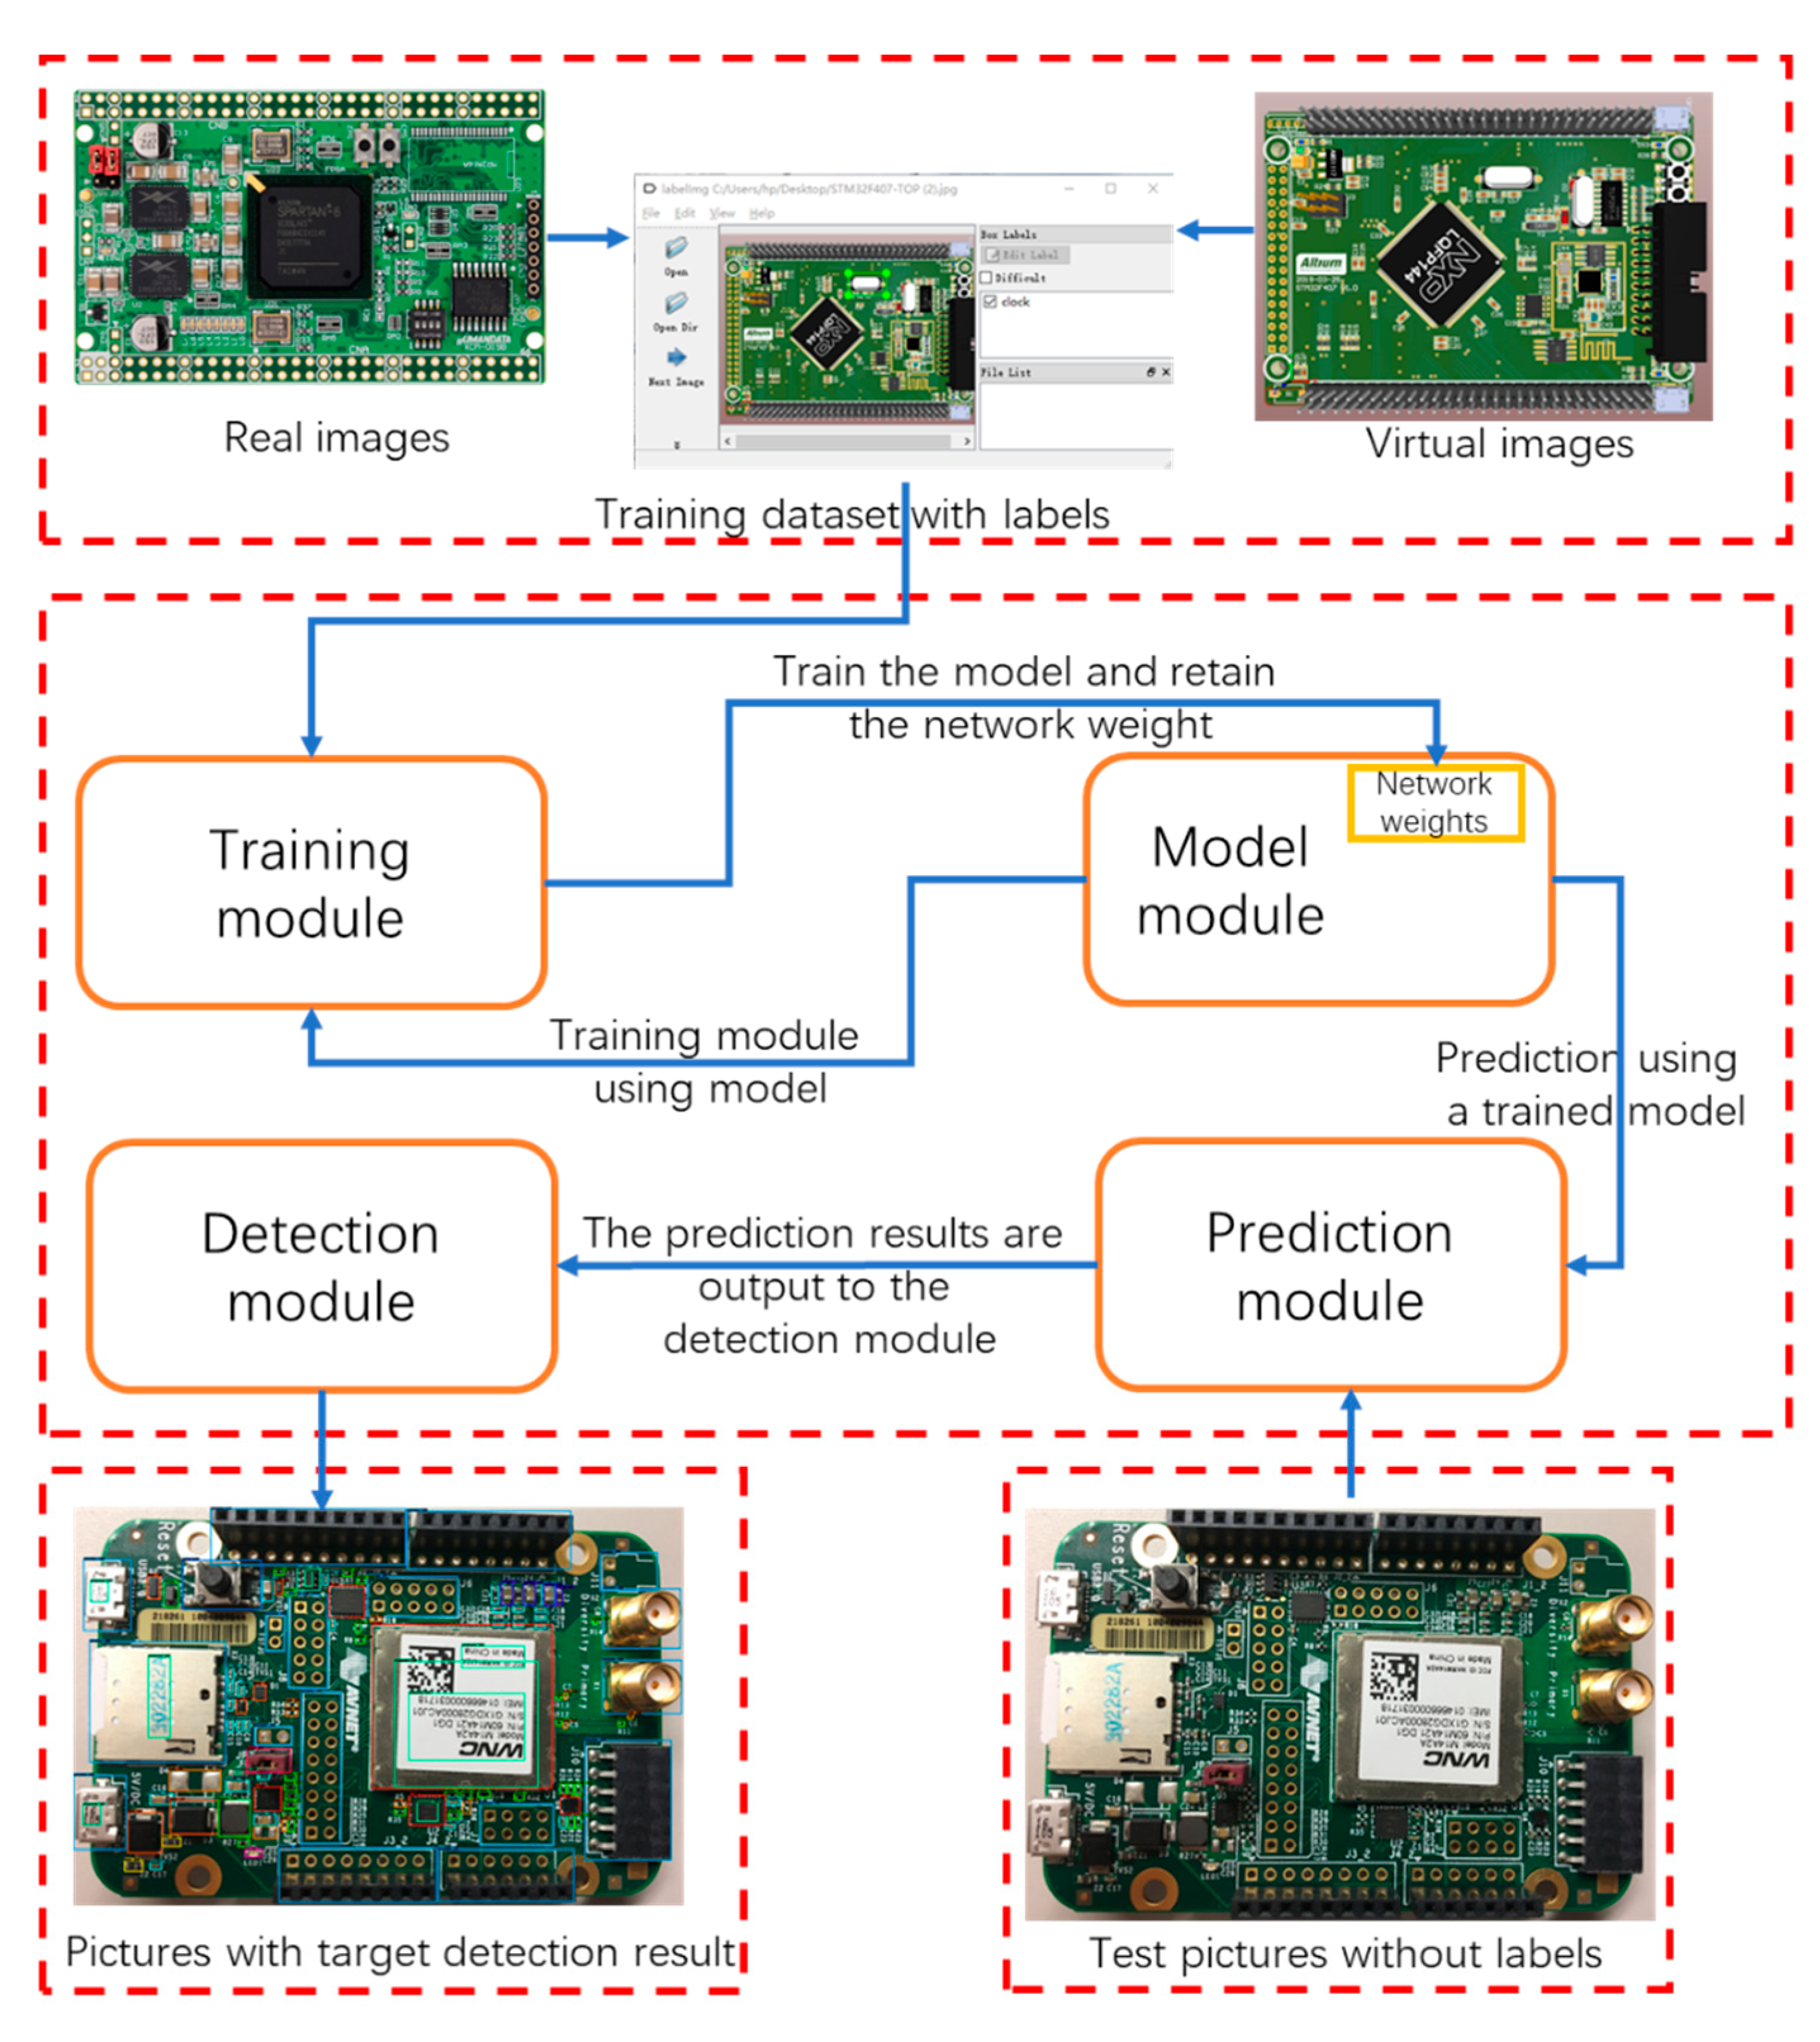 Current Sense Resistors Improve Safety and Efficiency, Advanced PCB Design  Blog